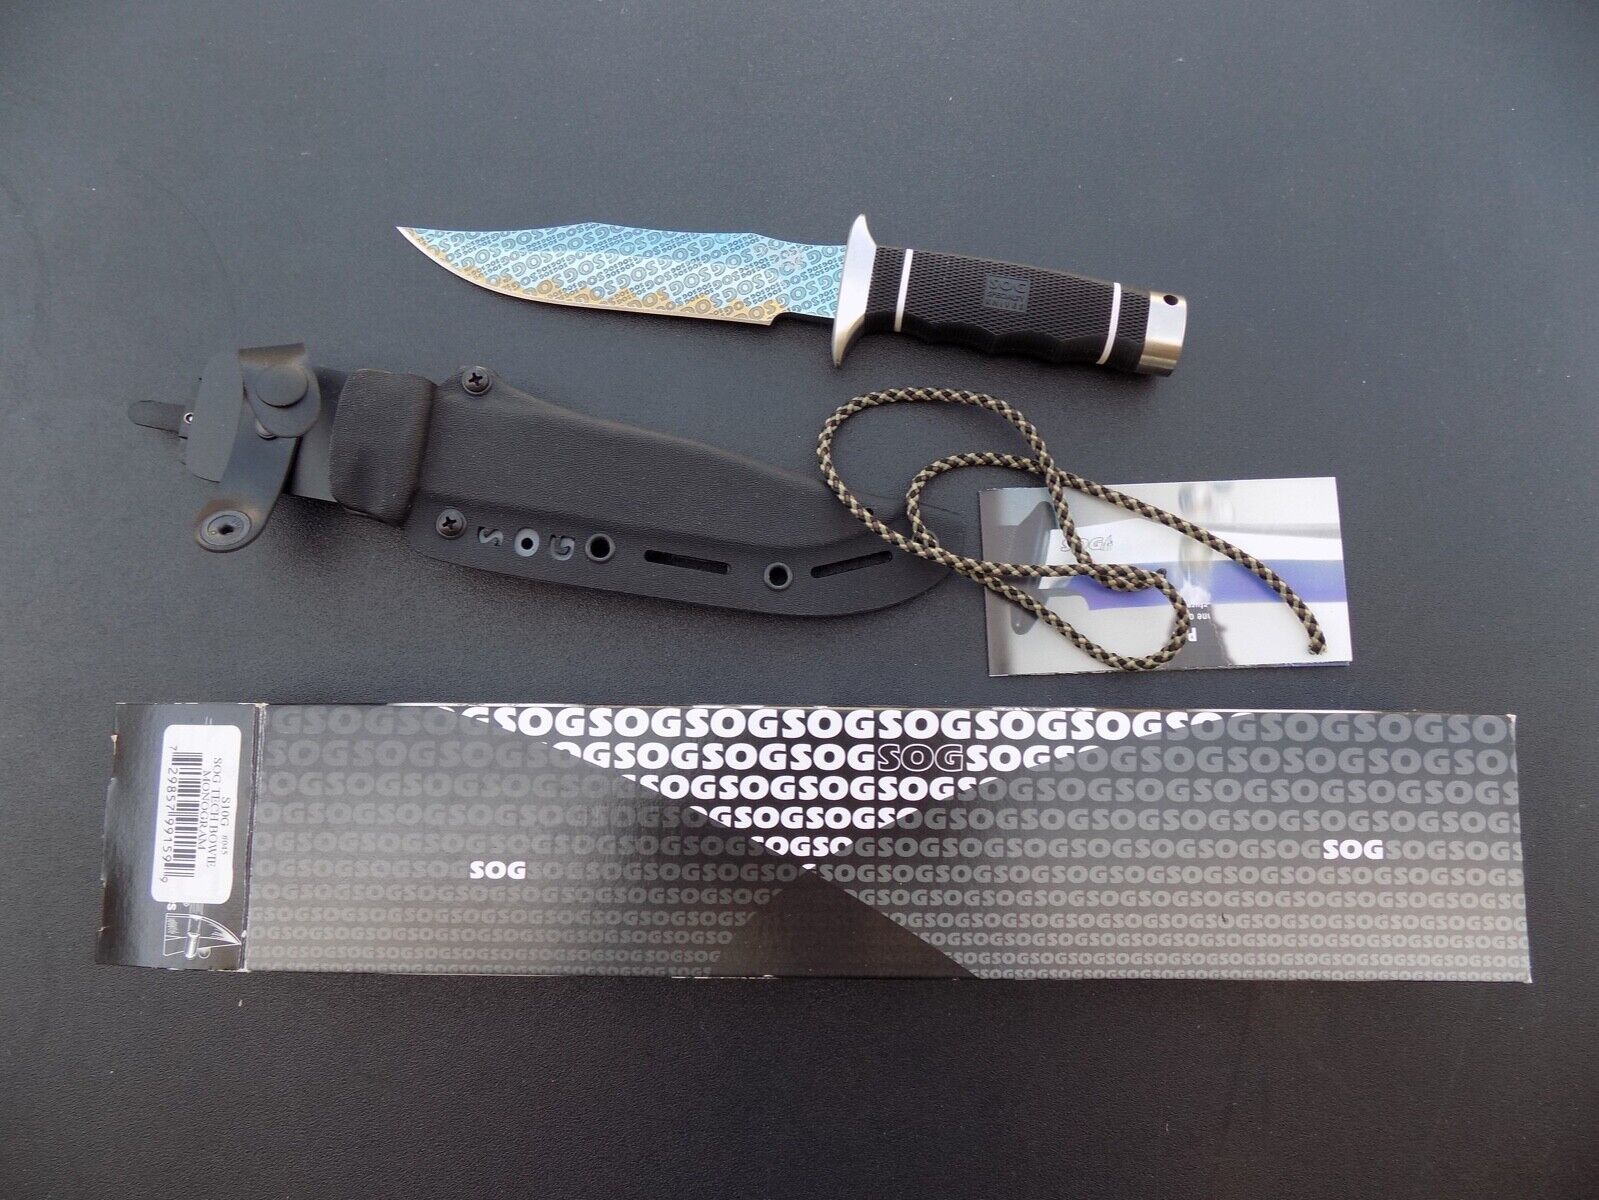 Rare Sog Tech Bowie knife with Monogram Blade Serial #45